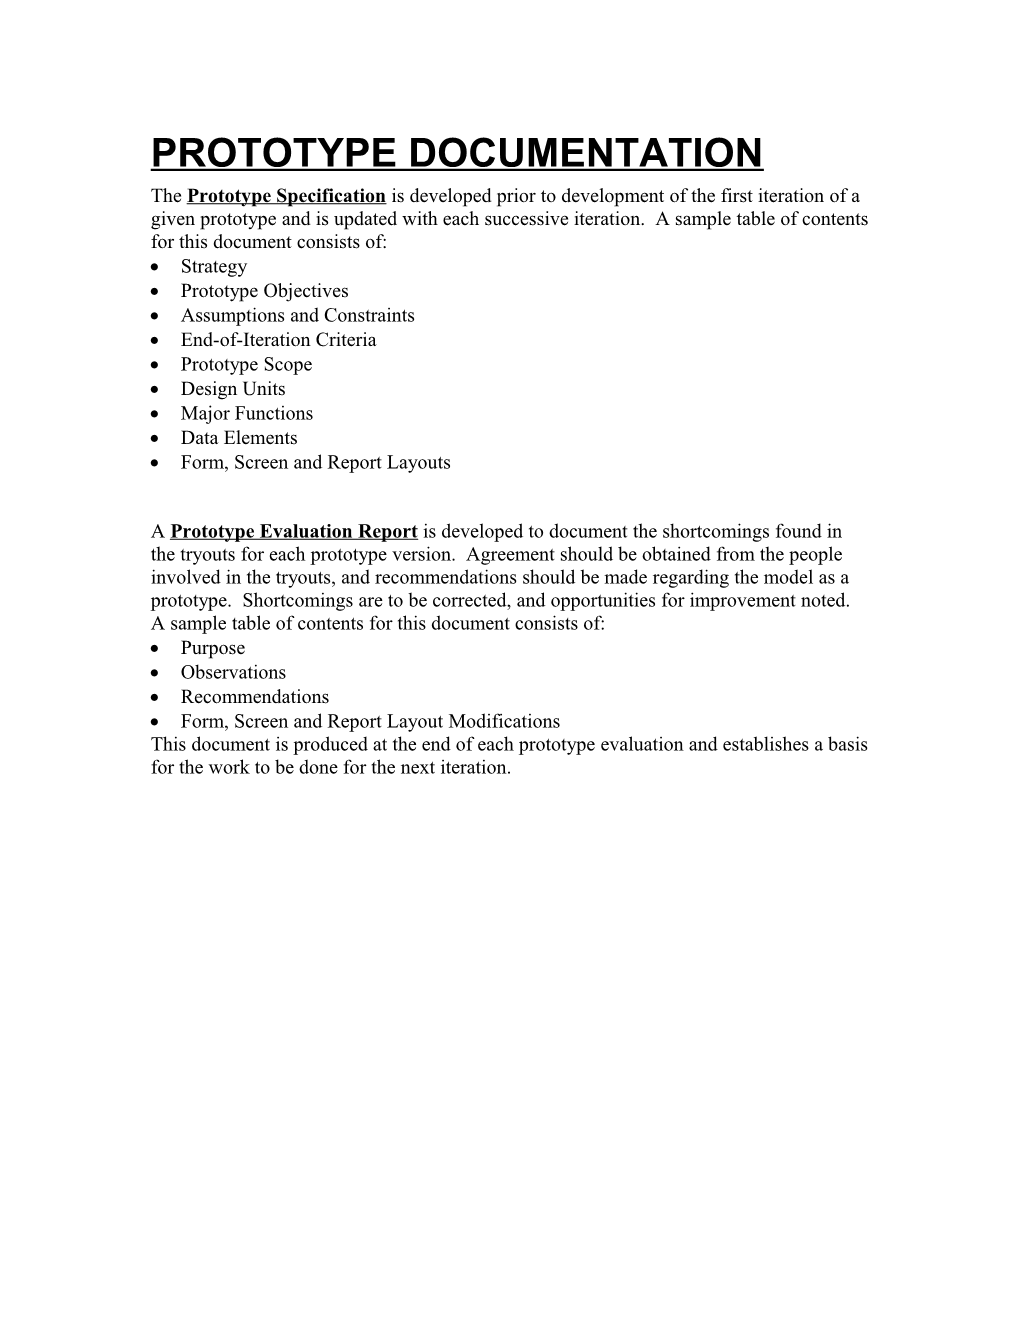 Prototype Documentation